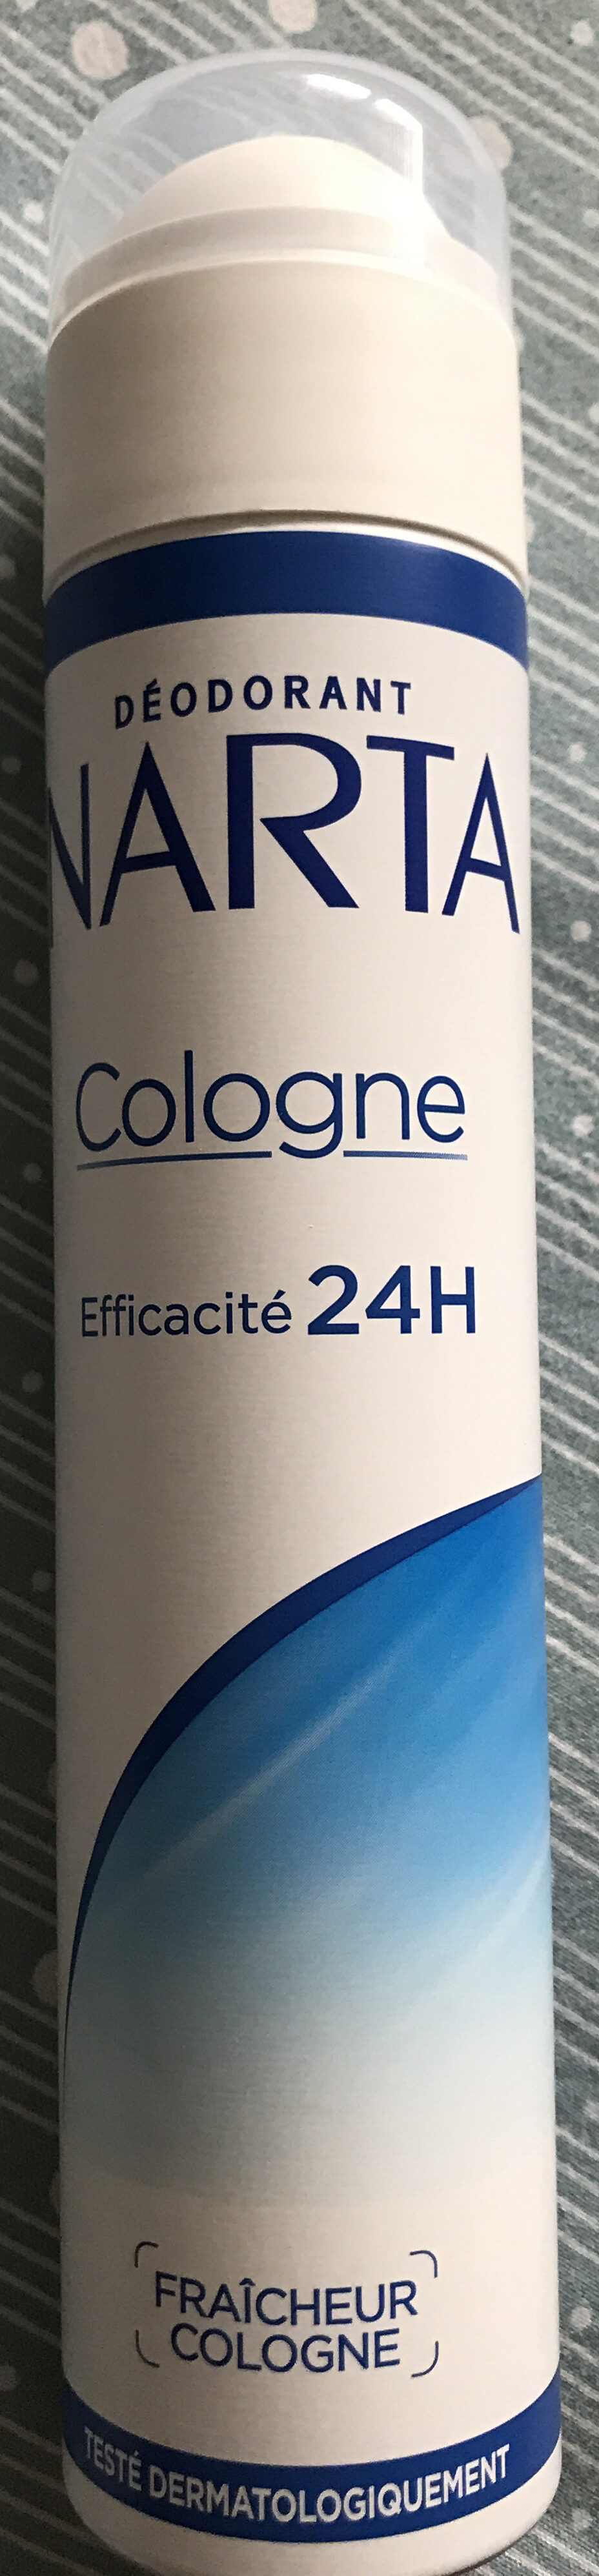 Deodorant narta cologne - Tuote - en